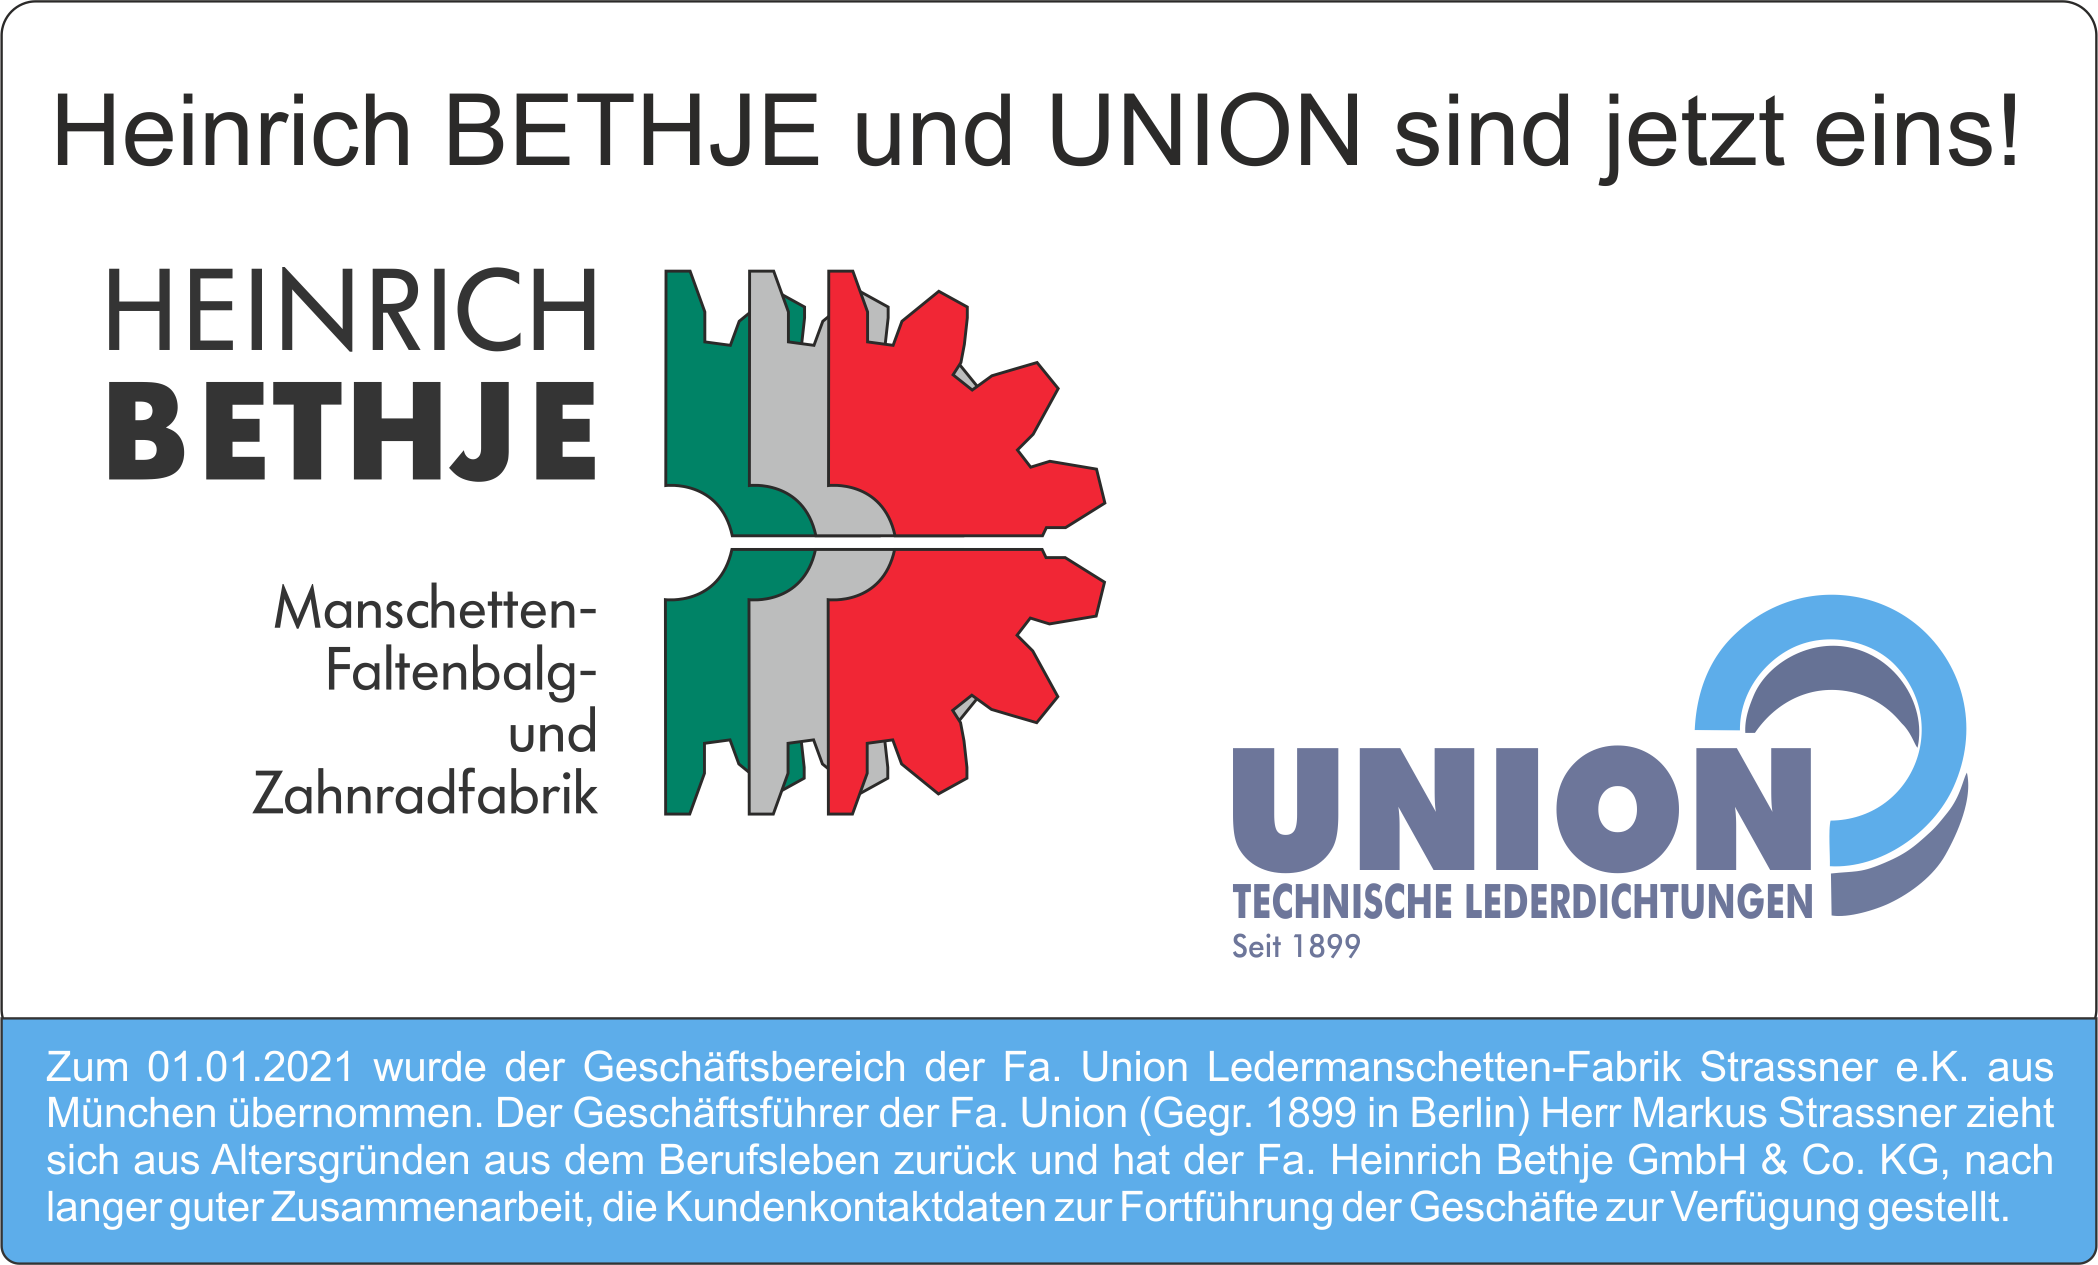 Heinrich Bethje GmbH & Co. KG